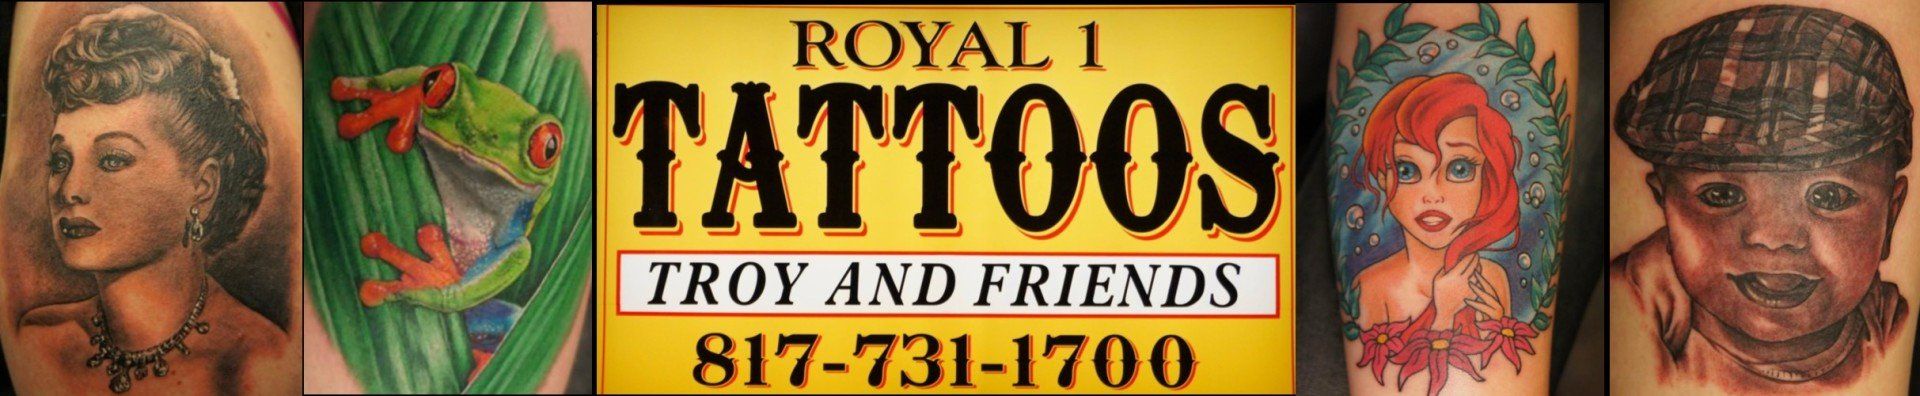 Tattoo — Royal 1 Tatoos in Fort Worth, TX